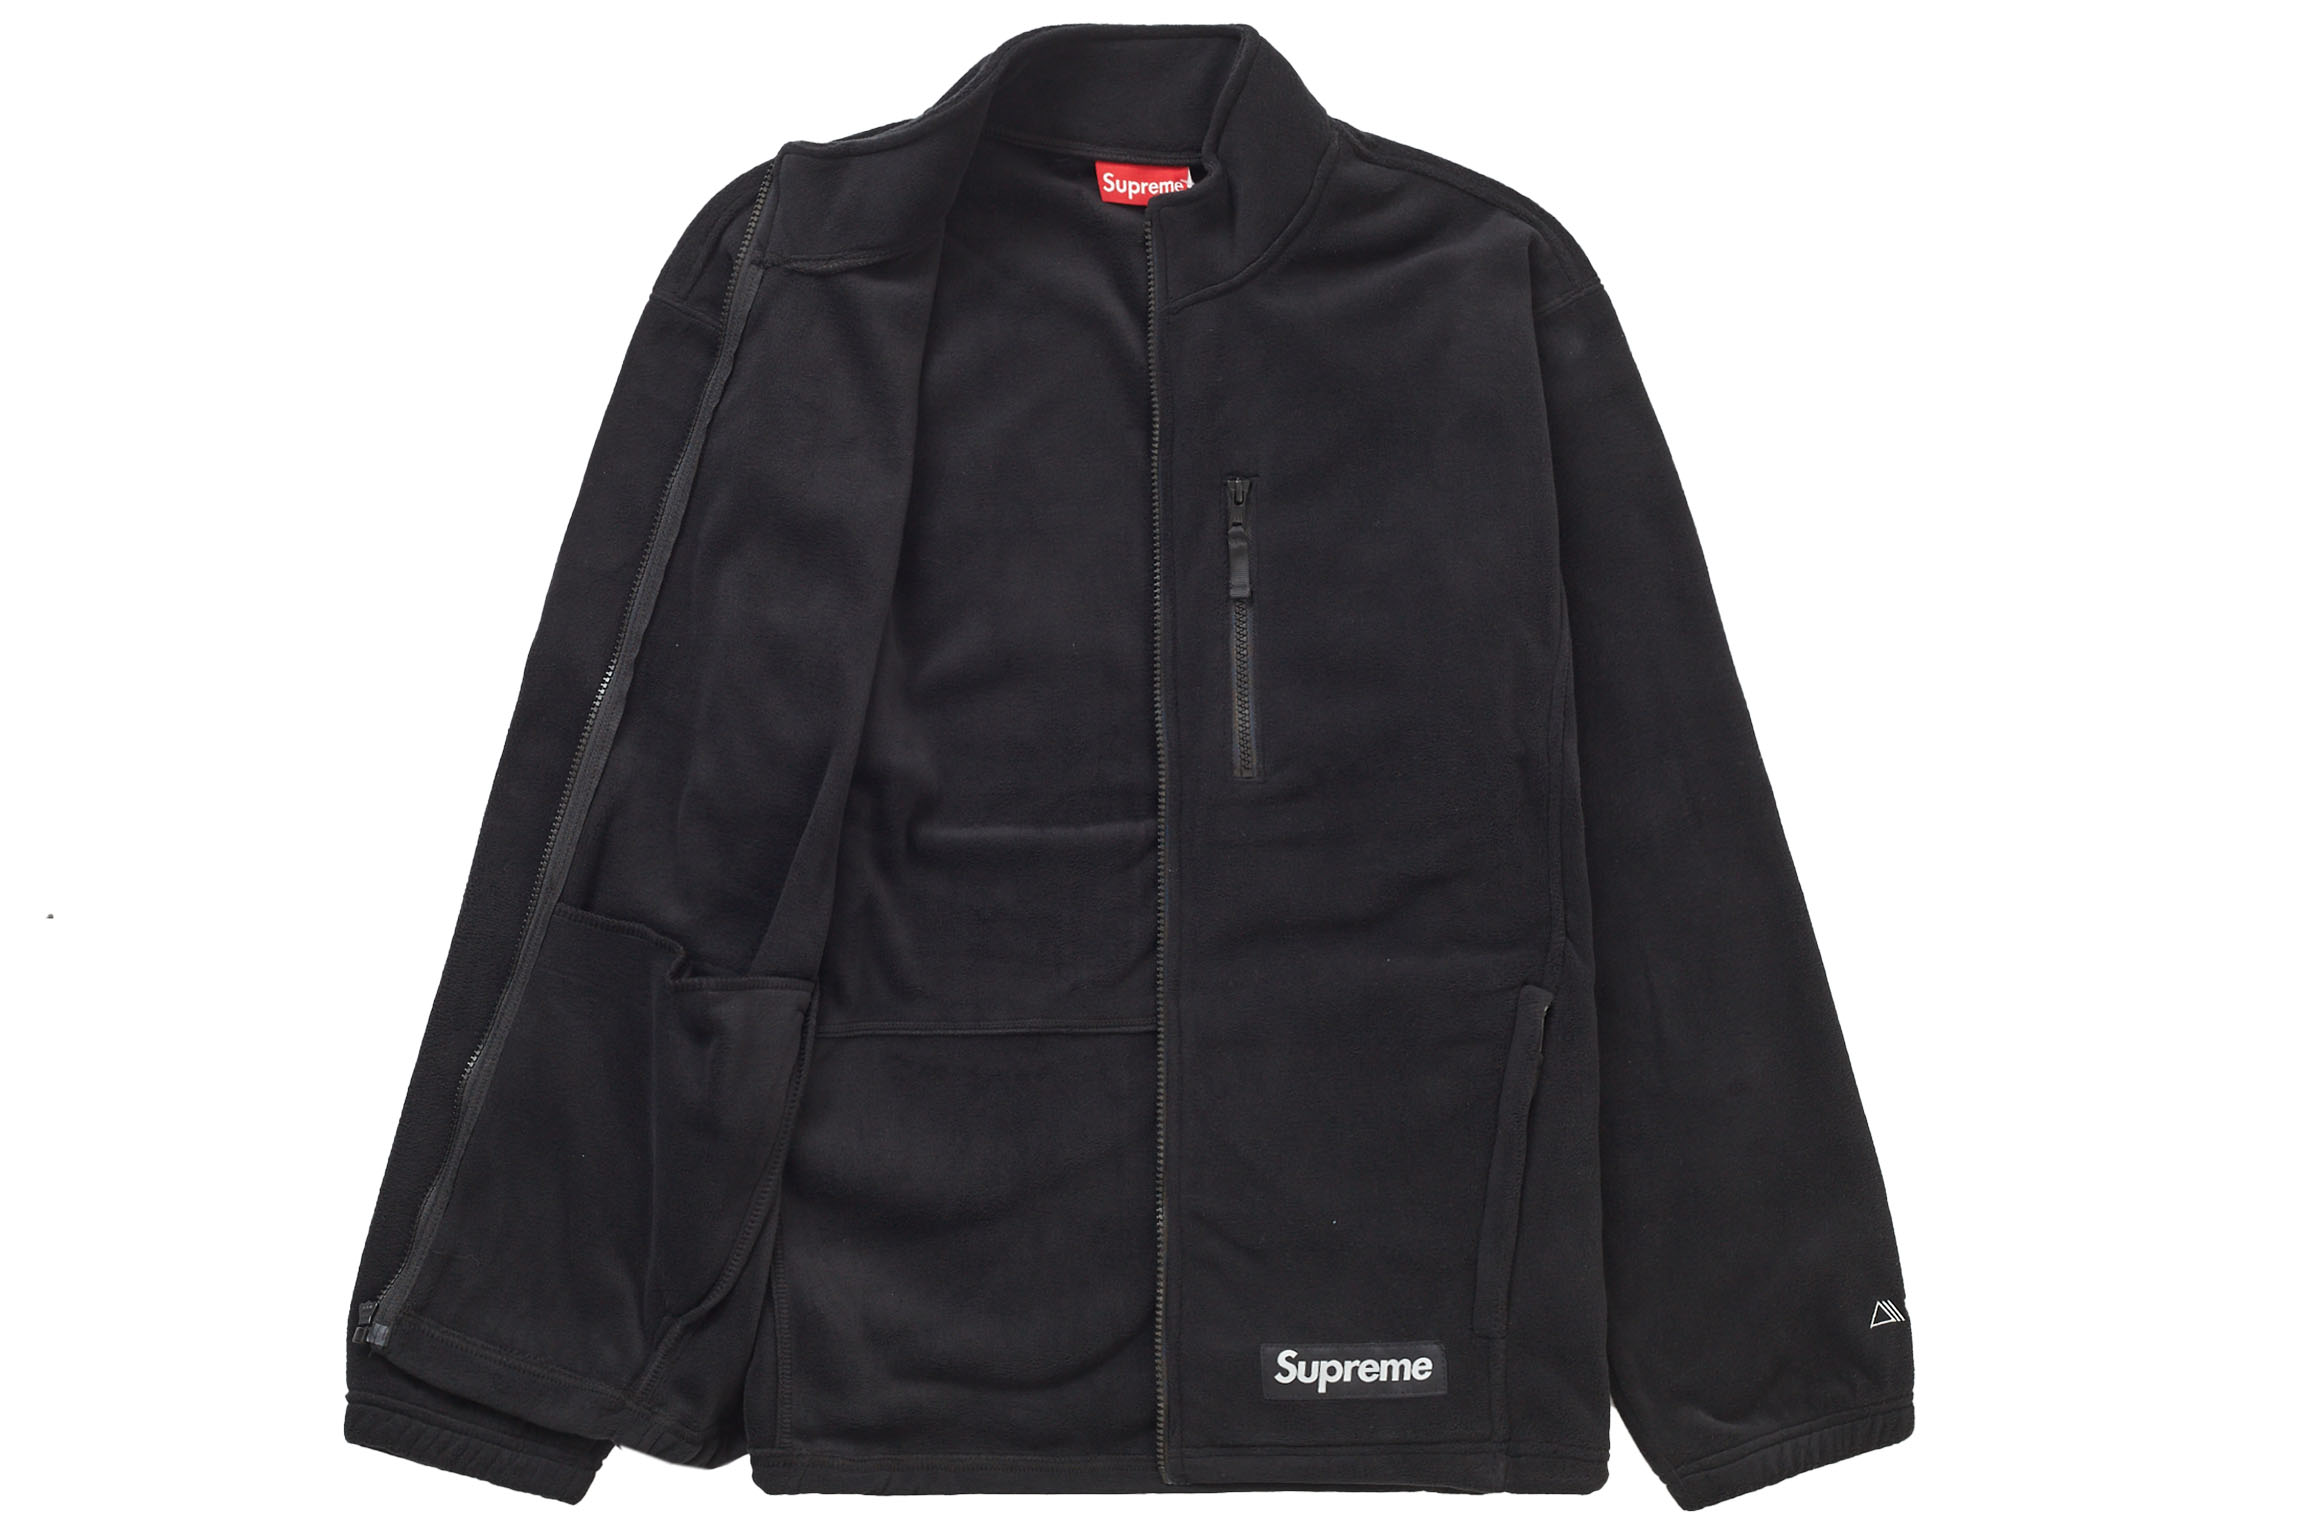 supreme polartec zip jacket camo L 国内正規品このまま購入してもいいですか